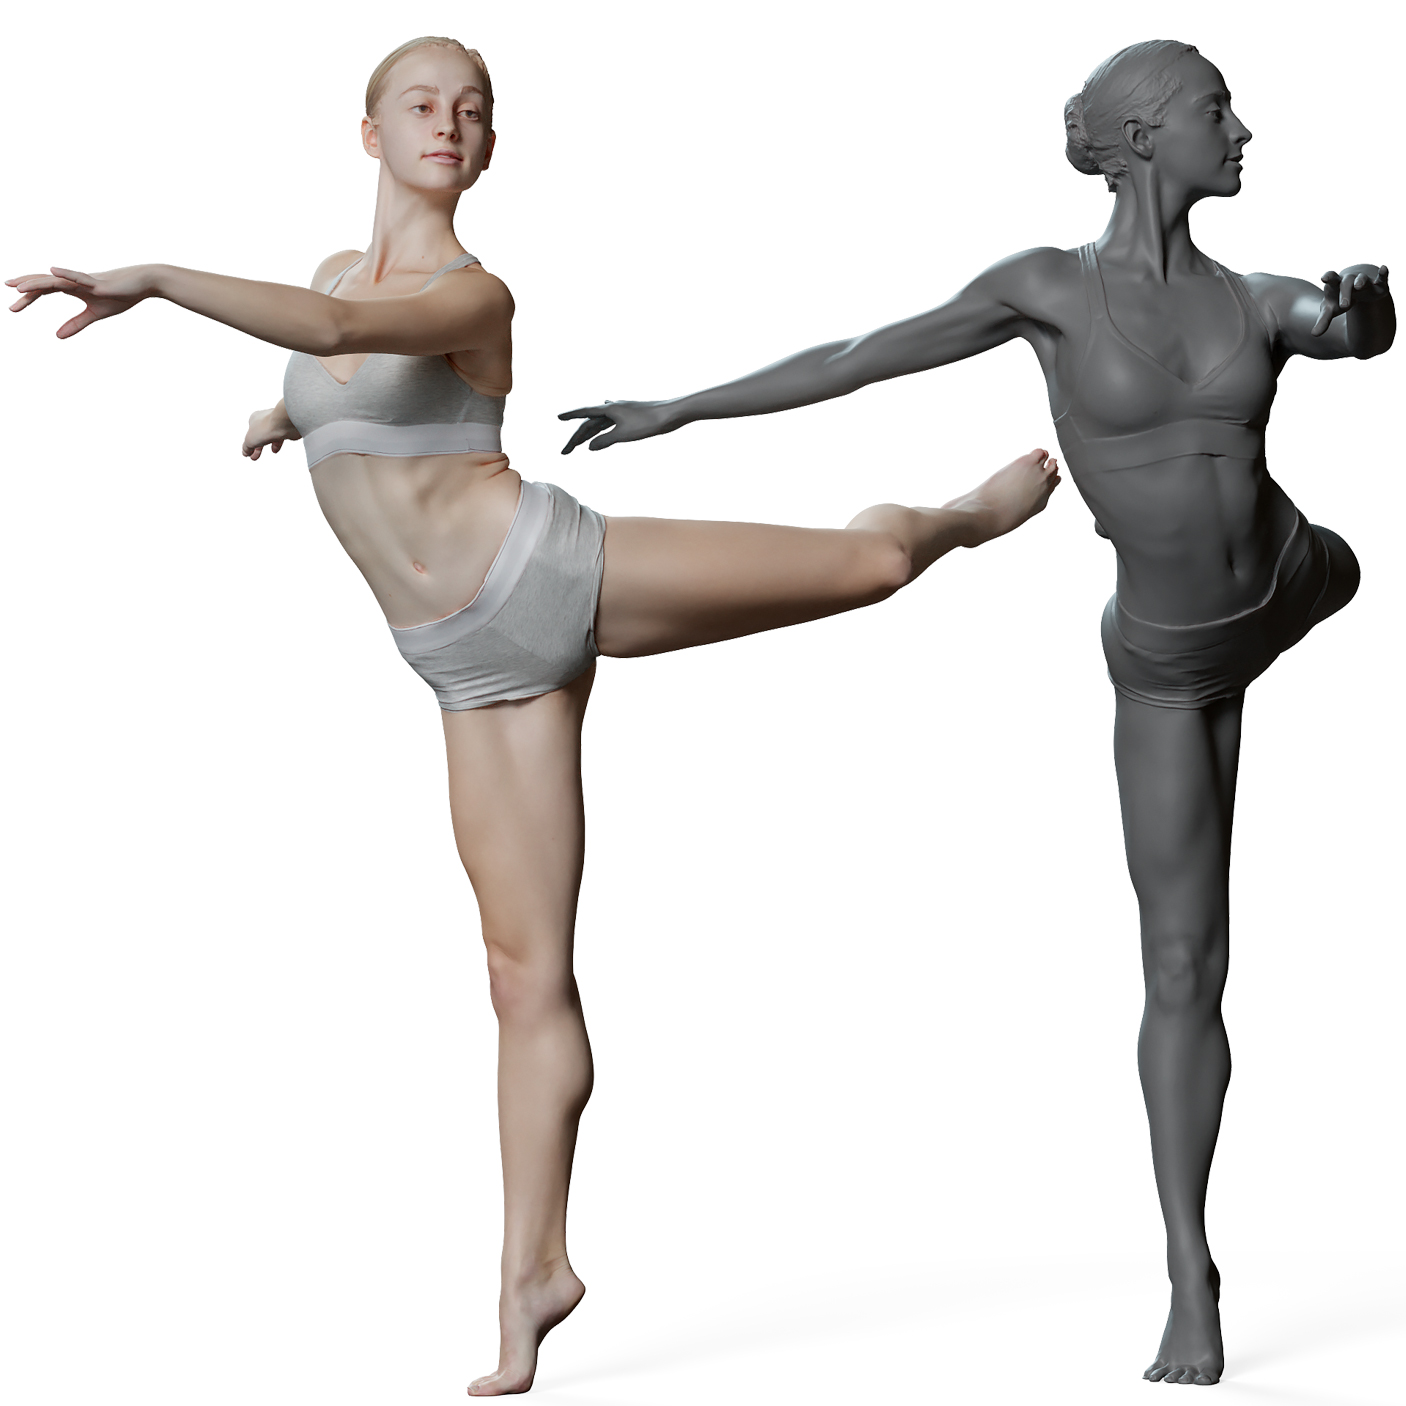 30,000+ Free Ballet Pose & Ballet Images - Pixabay